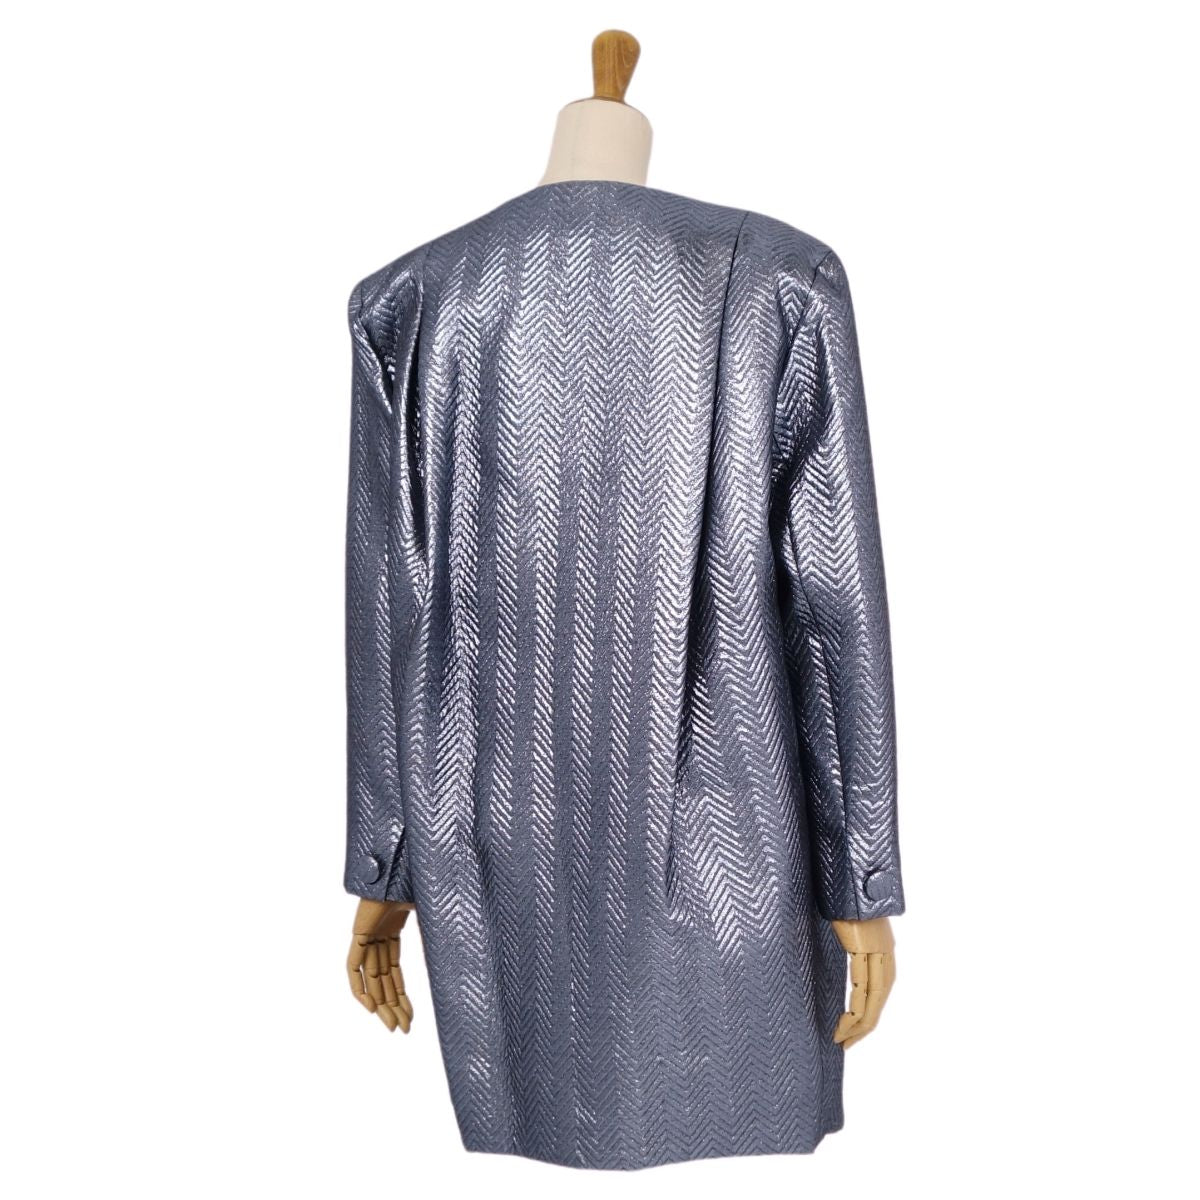 Vintage Christian Dior Jacket Ladies Size 9 (M equivalent) Metallic Turquoise Blue